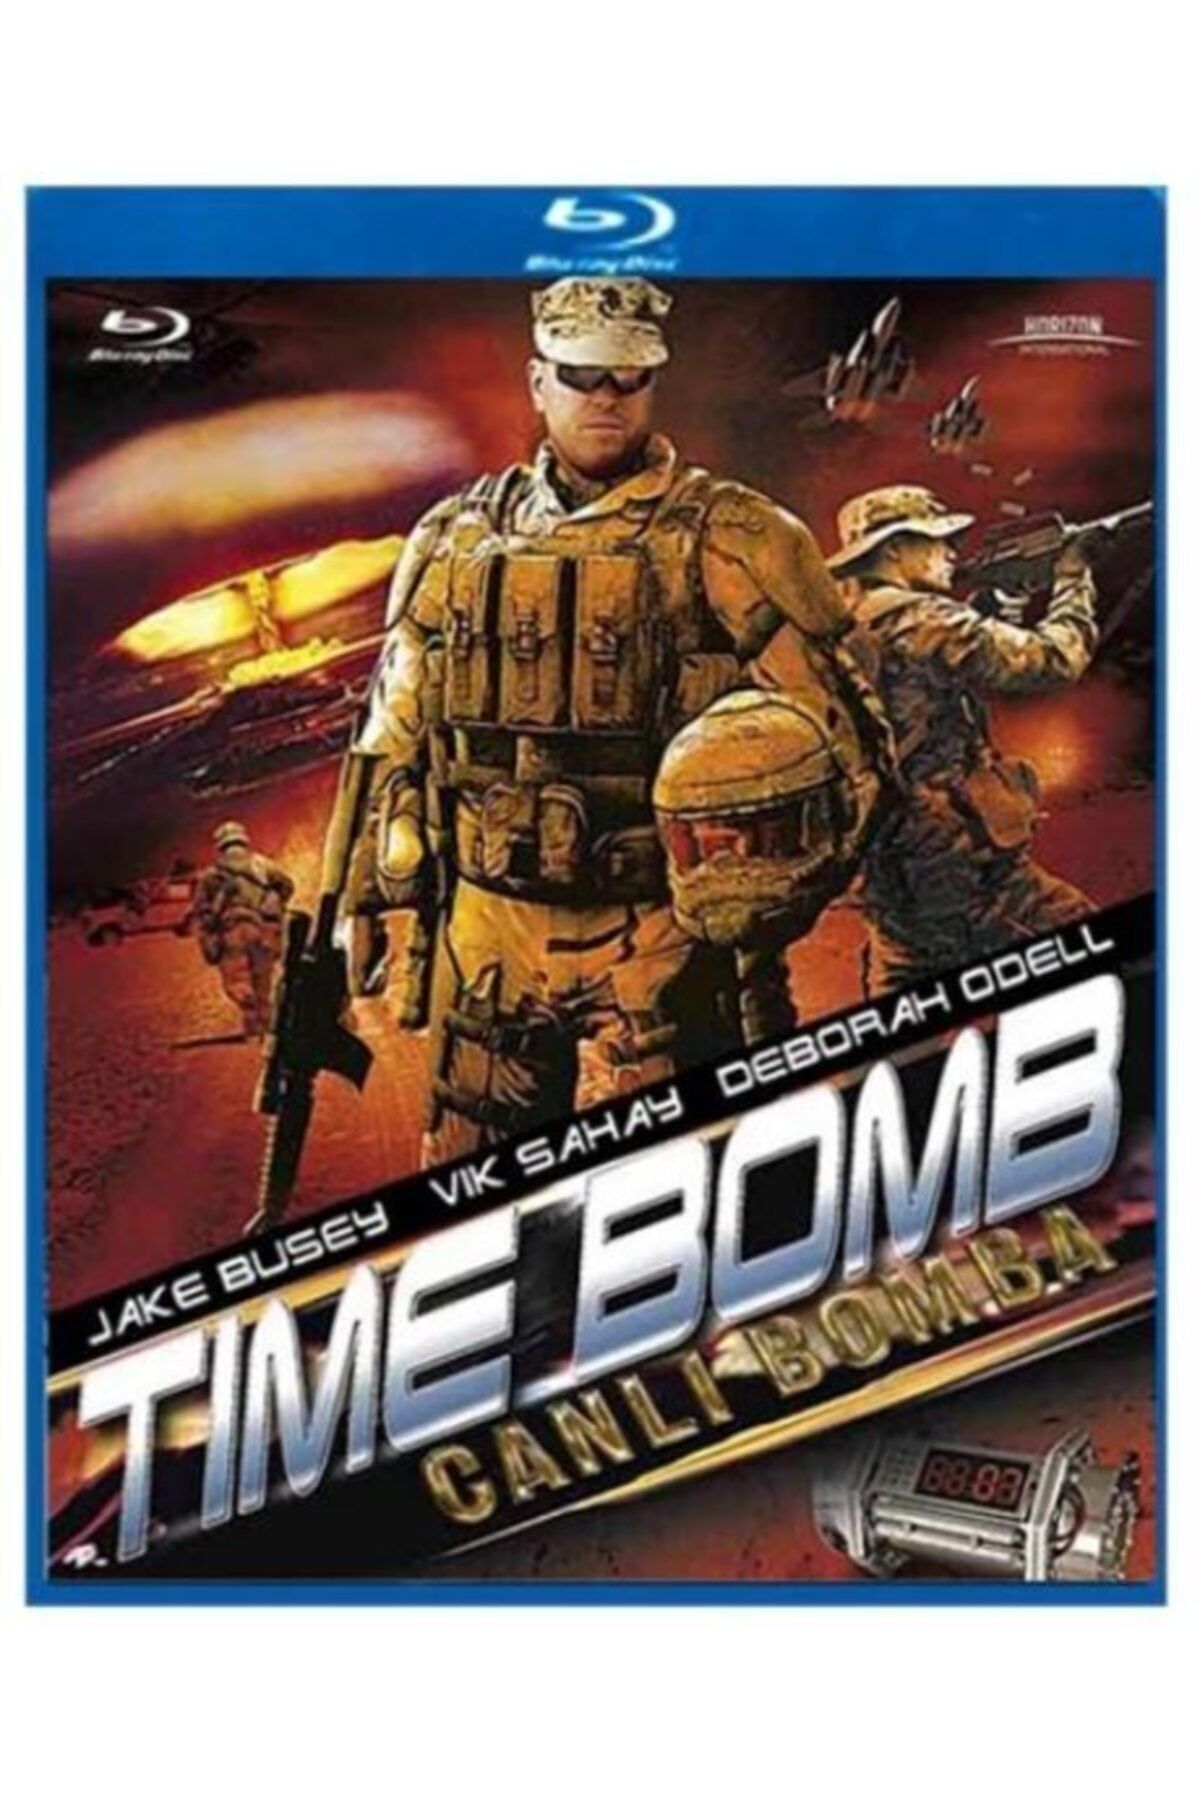 Horizon International Time Bomb Canlı Bomba Blu-ray